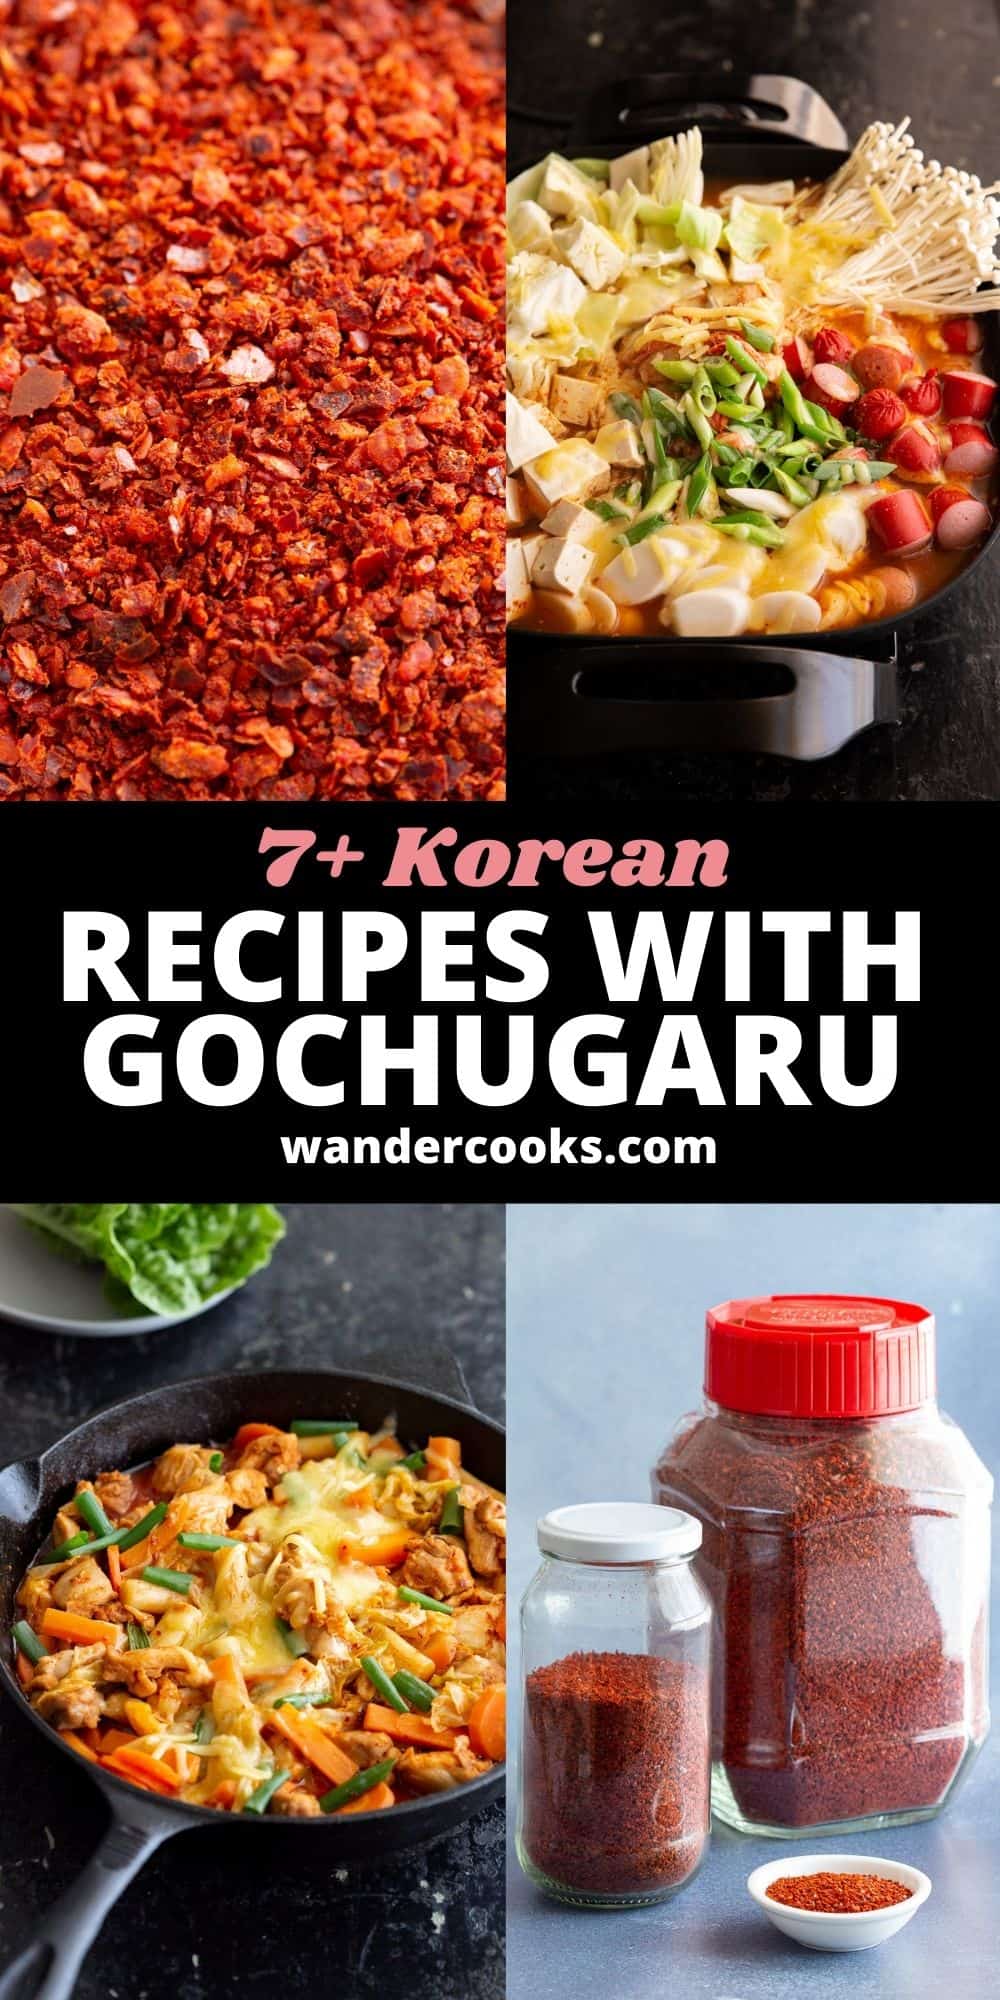 7+ Amazing Recipes to Make with Gochugaru - Korean Chilli Flakes